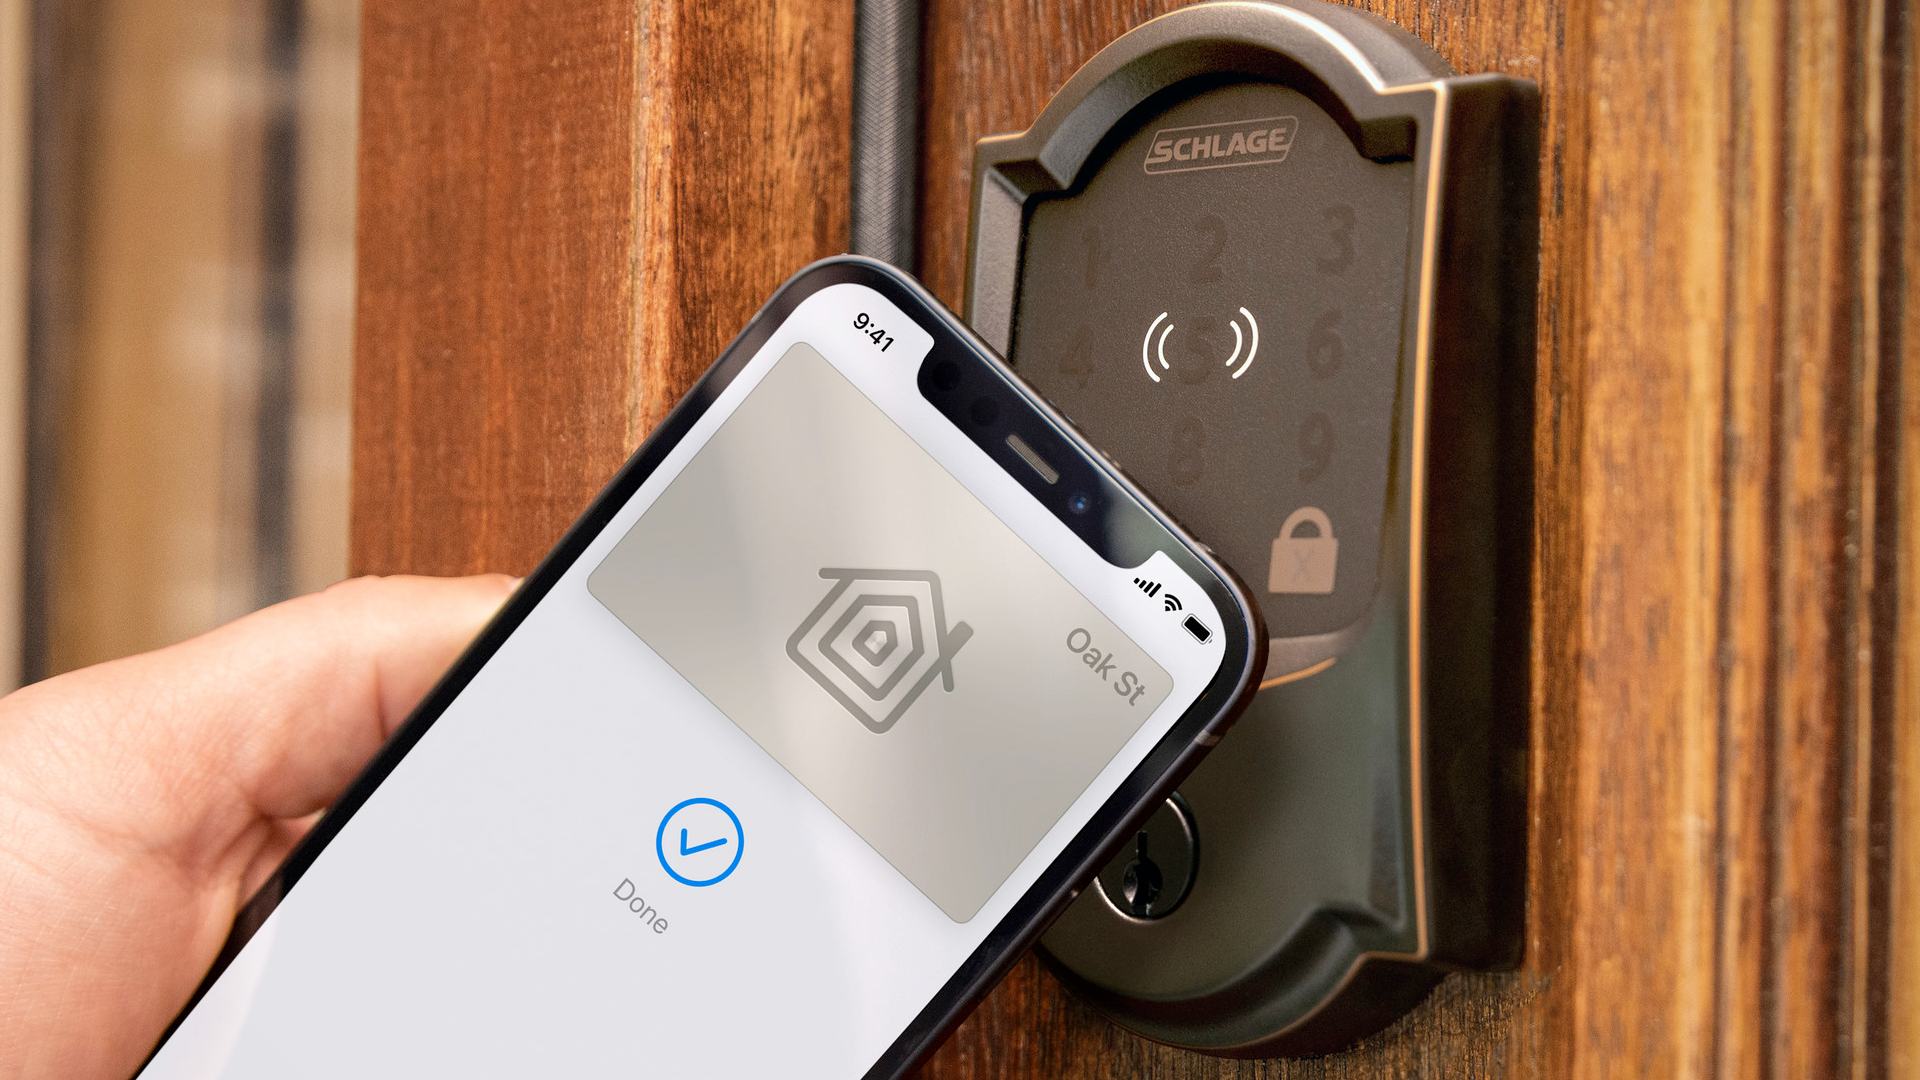 Schlage Encode Plus smart lock being unlocked by an iPhone's Apple Wallet app.